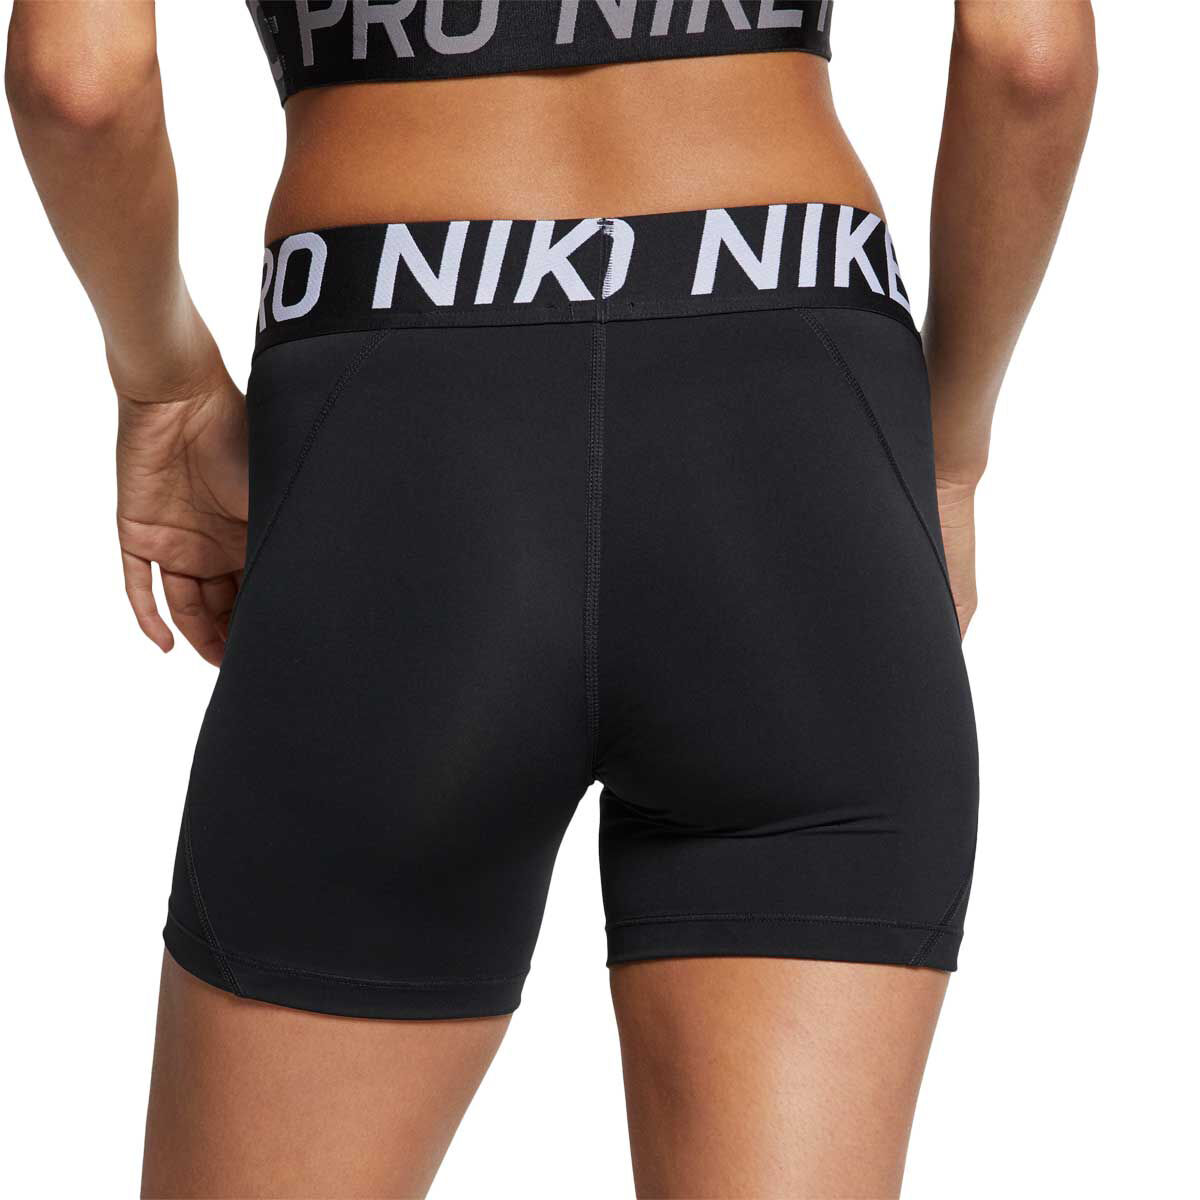 nike 5 inch shorts womens